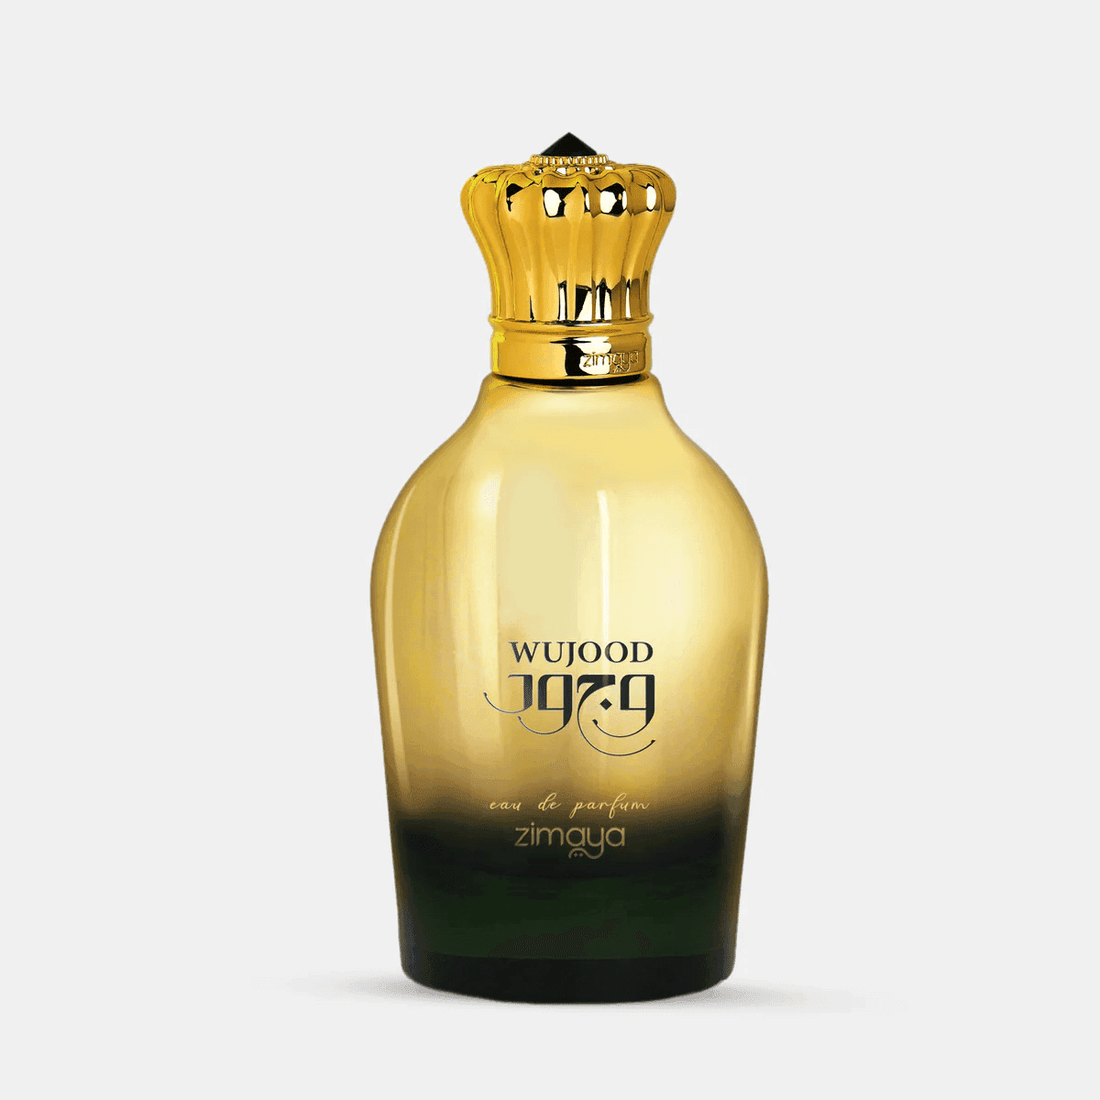 Elegant 100ml bottle of Zimaya Wujood Eau De Parfum, featuring an intoxicating mix of exotic aromas.